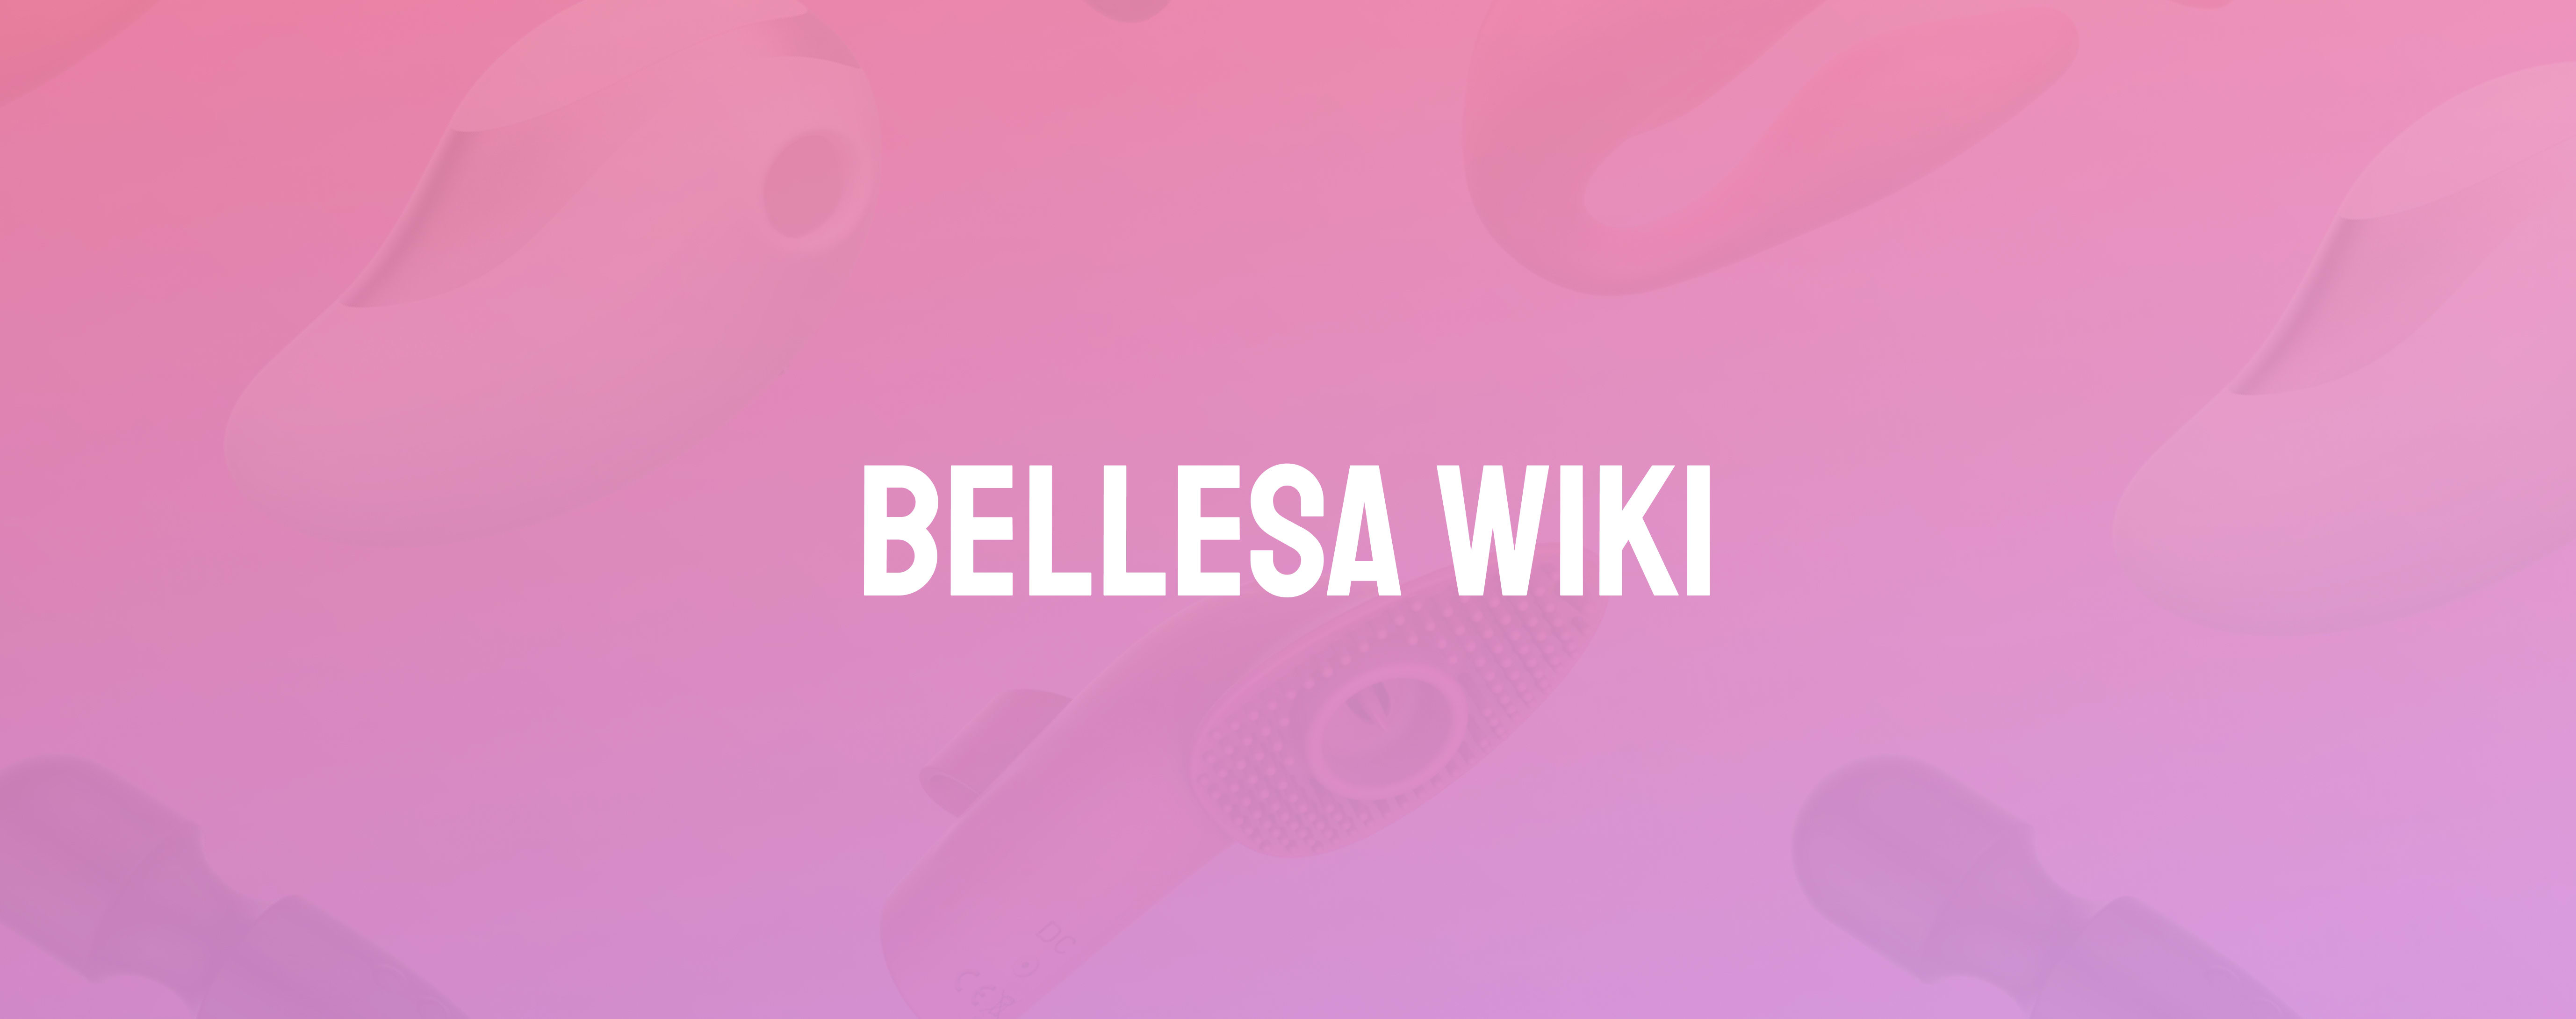 5510px x 2180px - Oral Sex - Bellesa Wiki | Bellesa - Porn for Women